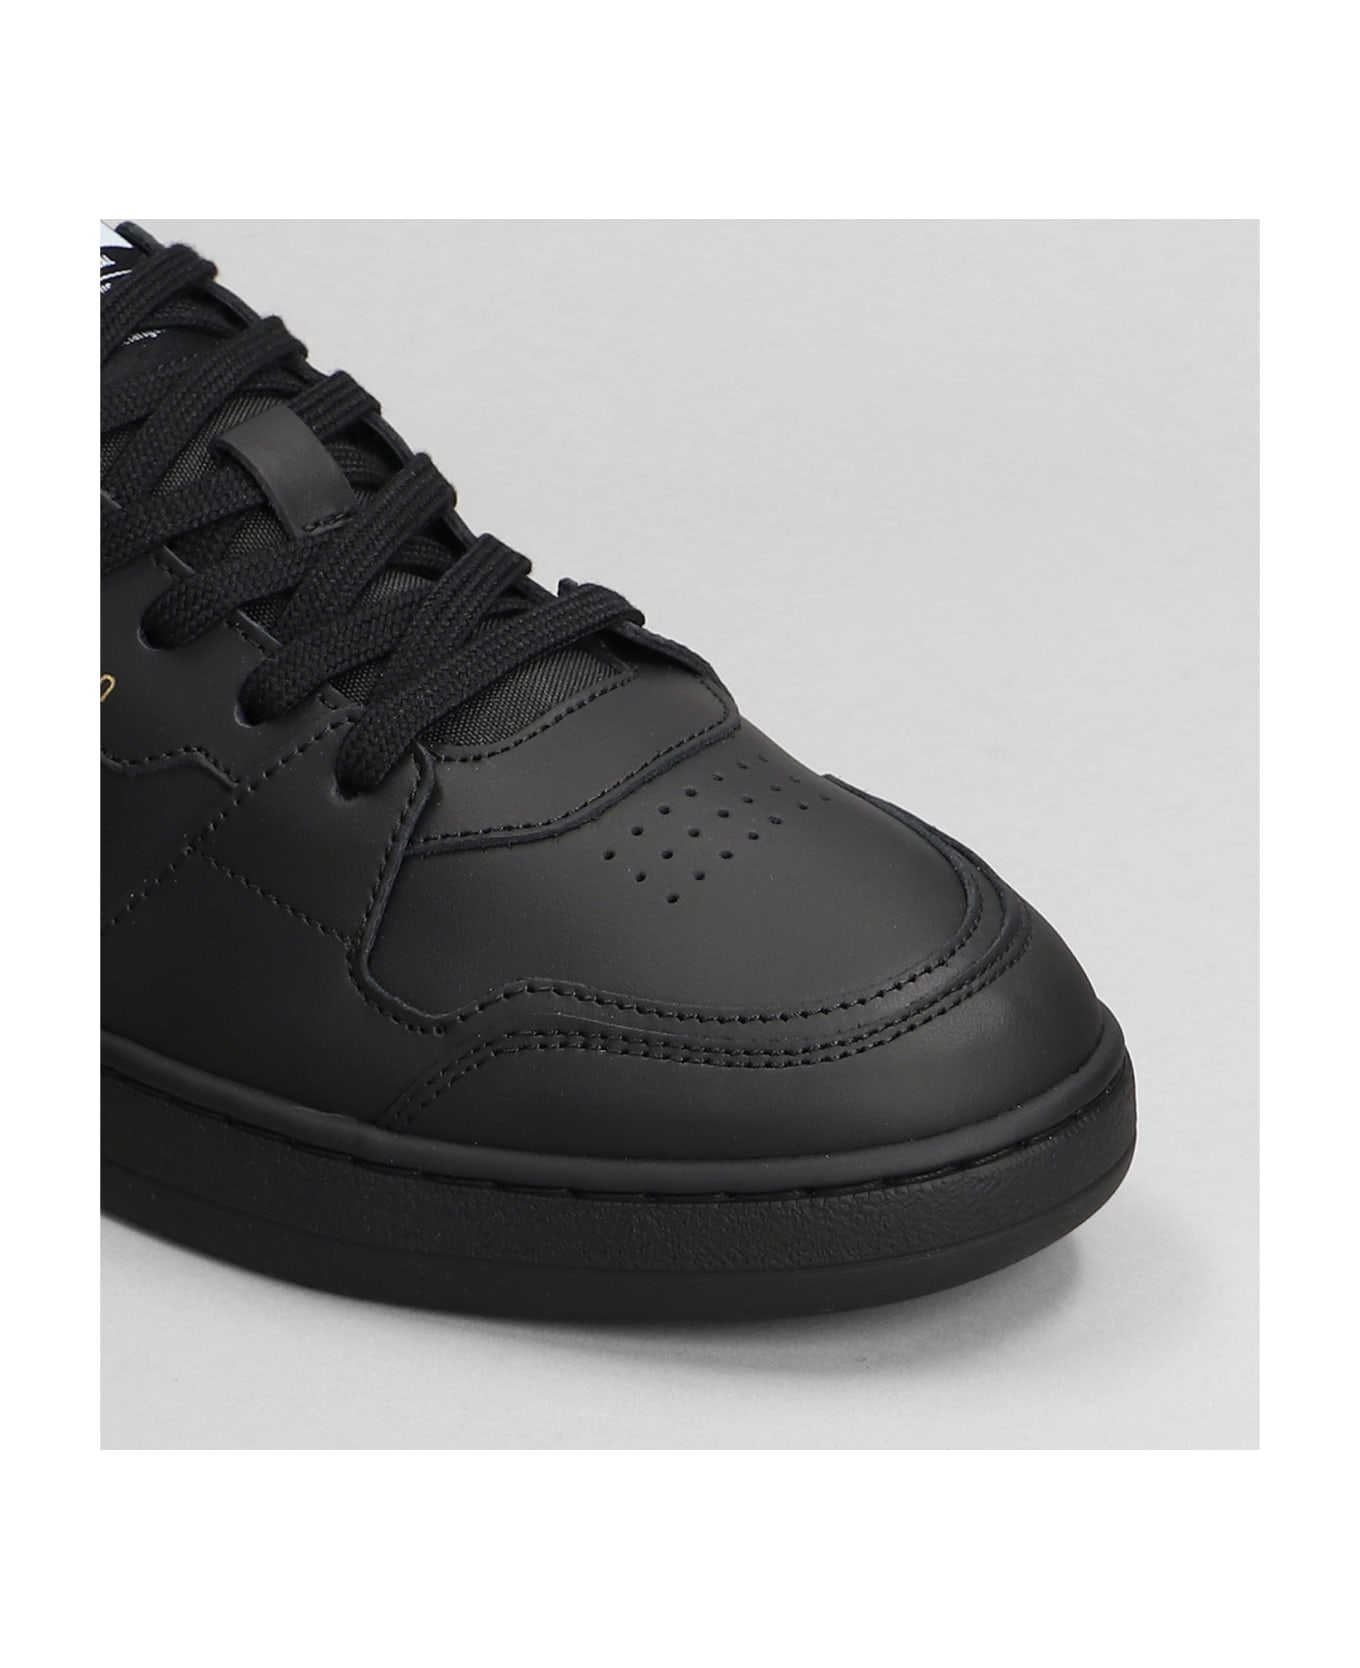 Axel Arigato Dice Lo Sneaker Sneakers In Black Leather - black